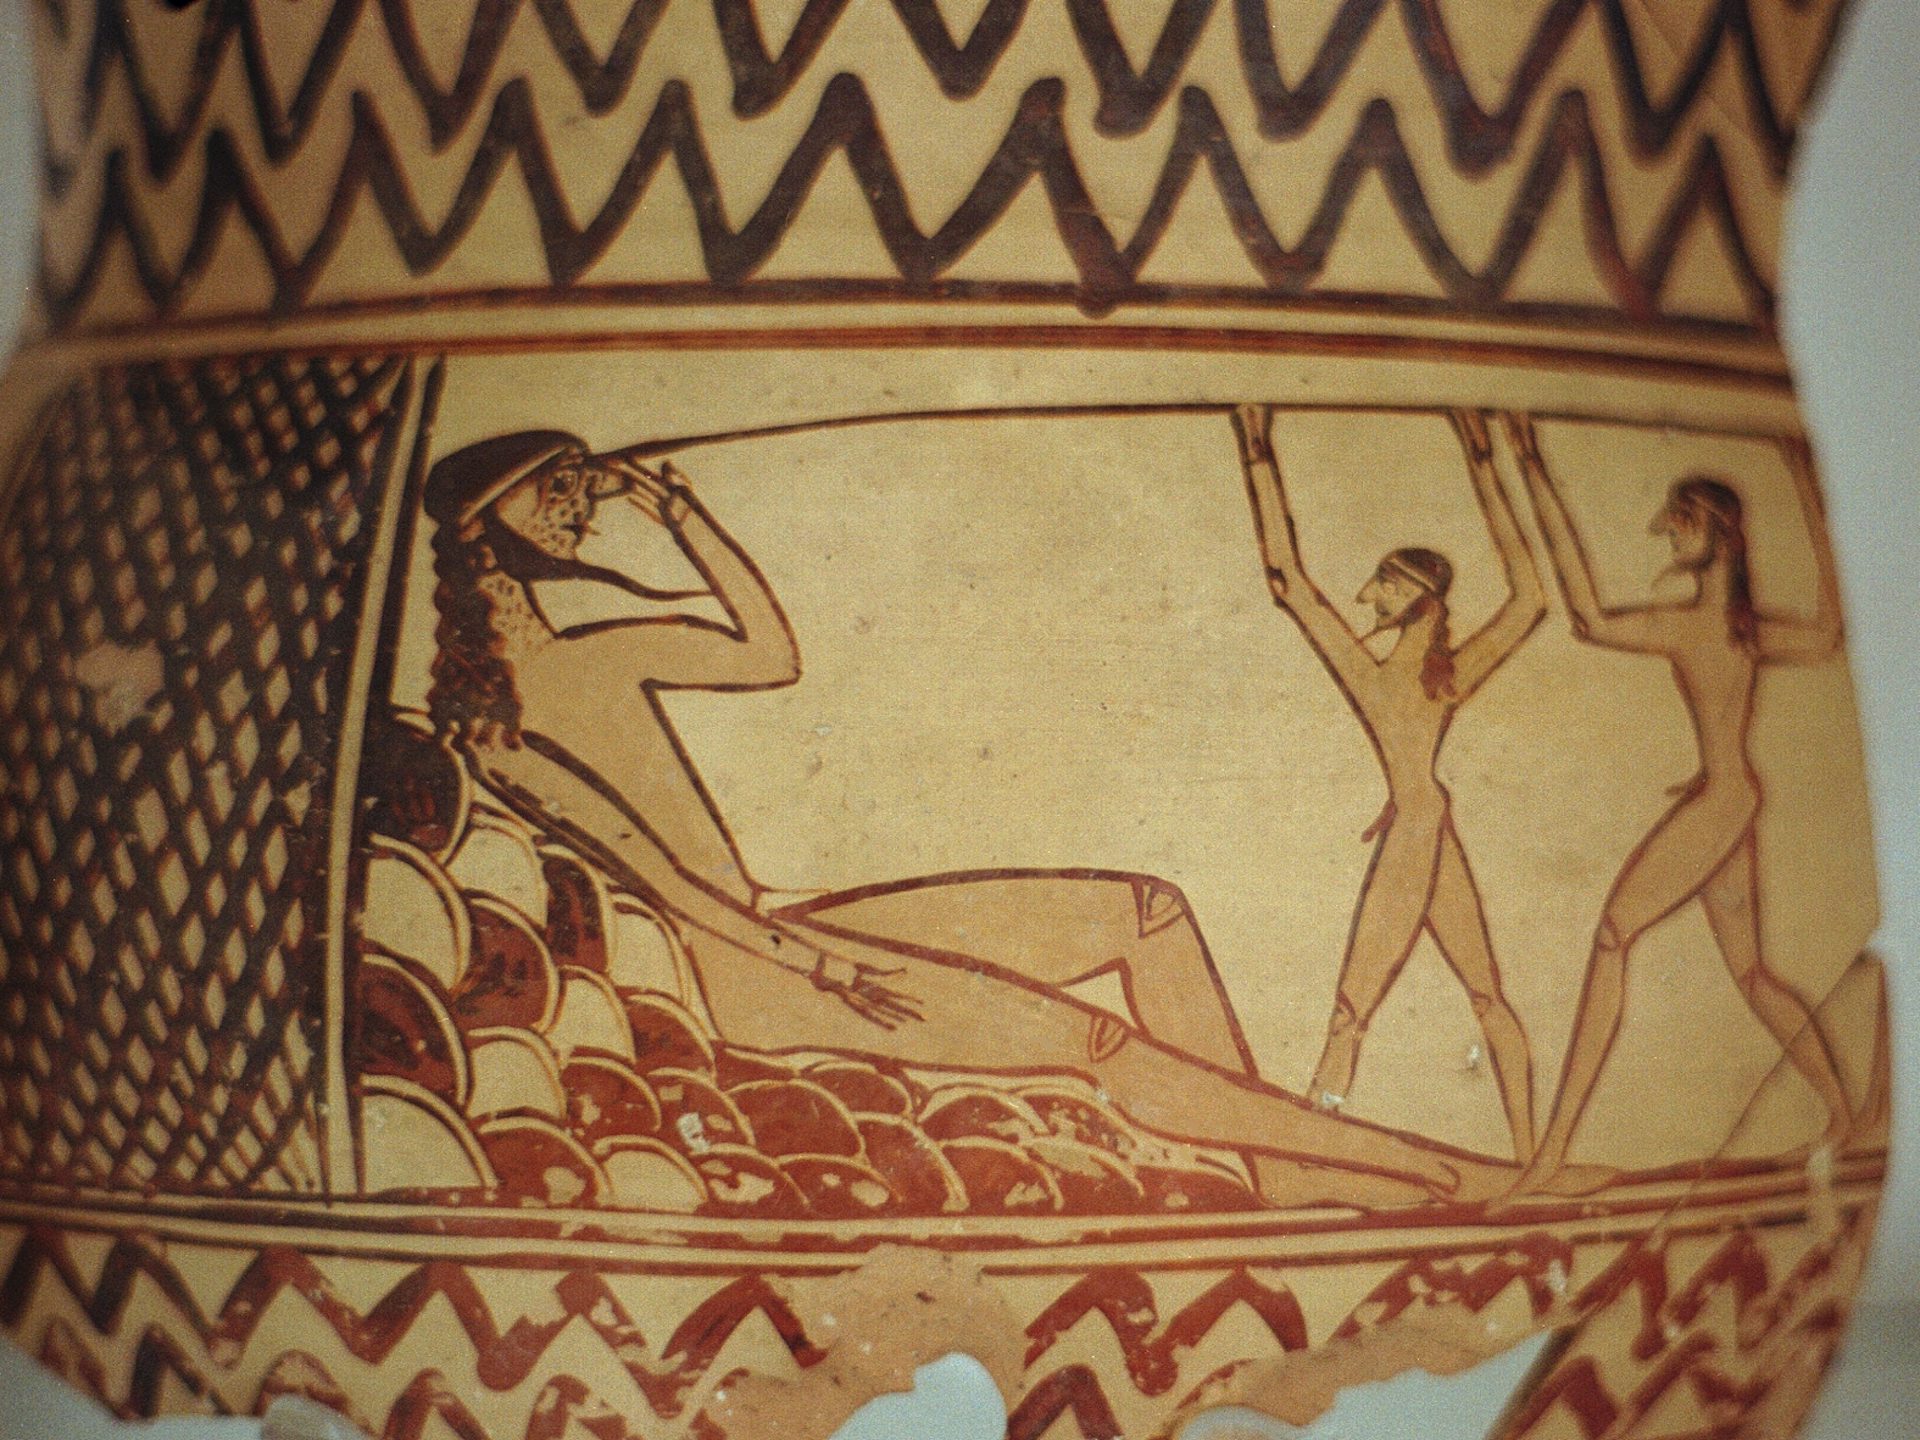 Vase painting of Odysseus blinding the Cyclops Polyphemus